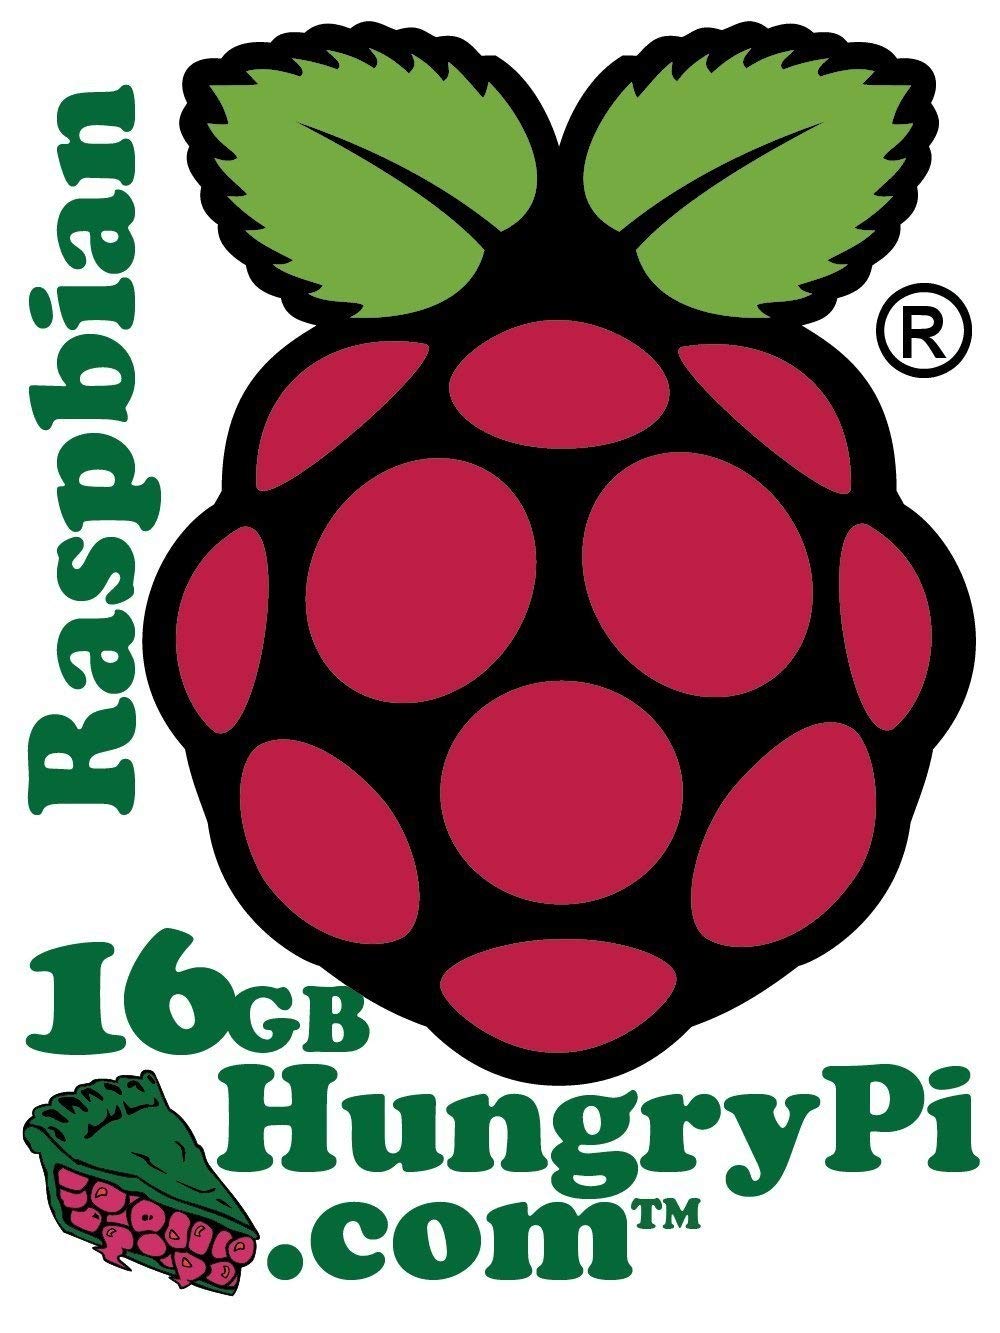 Preloaded SD Card for Raspberry Pi (16GB, Raspbian "wheezy")